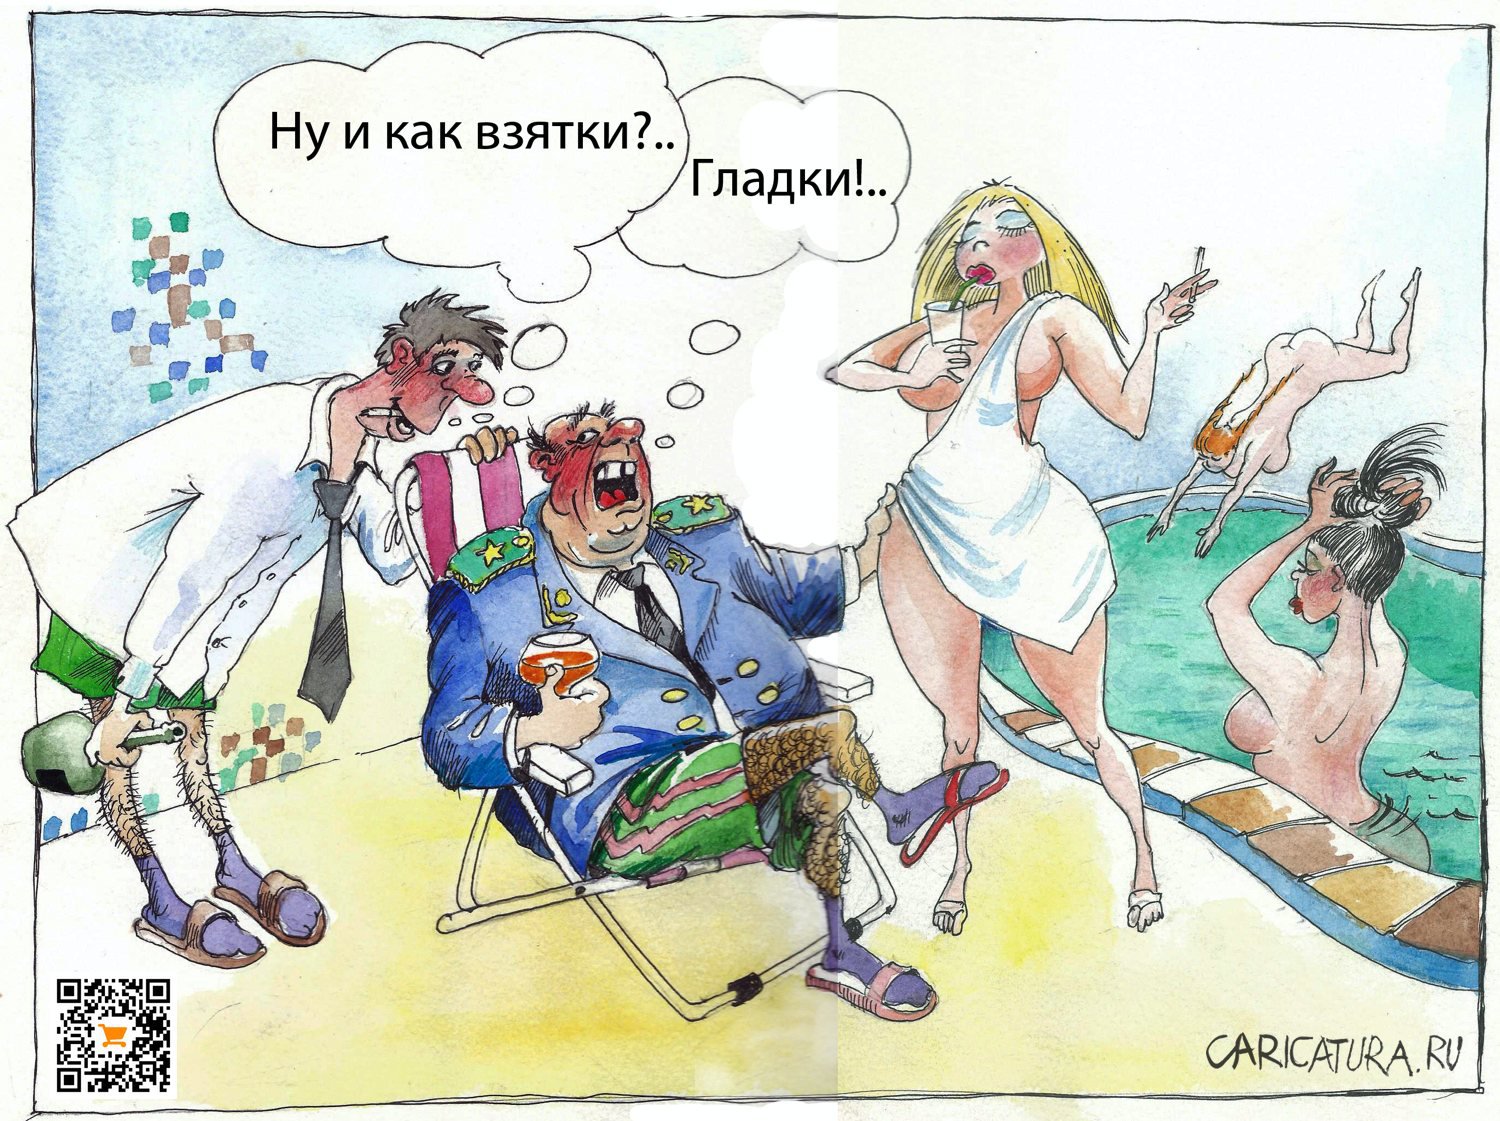 Карикатура "Взятки", Александр Шульпинов